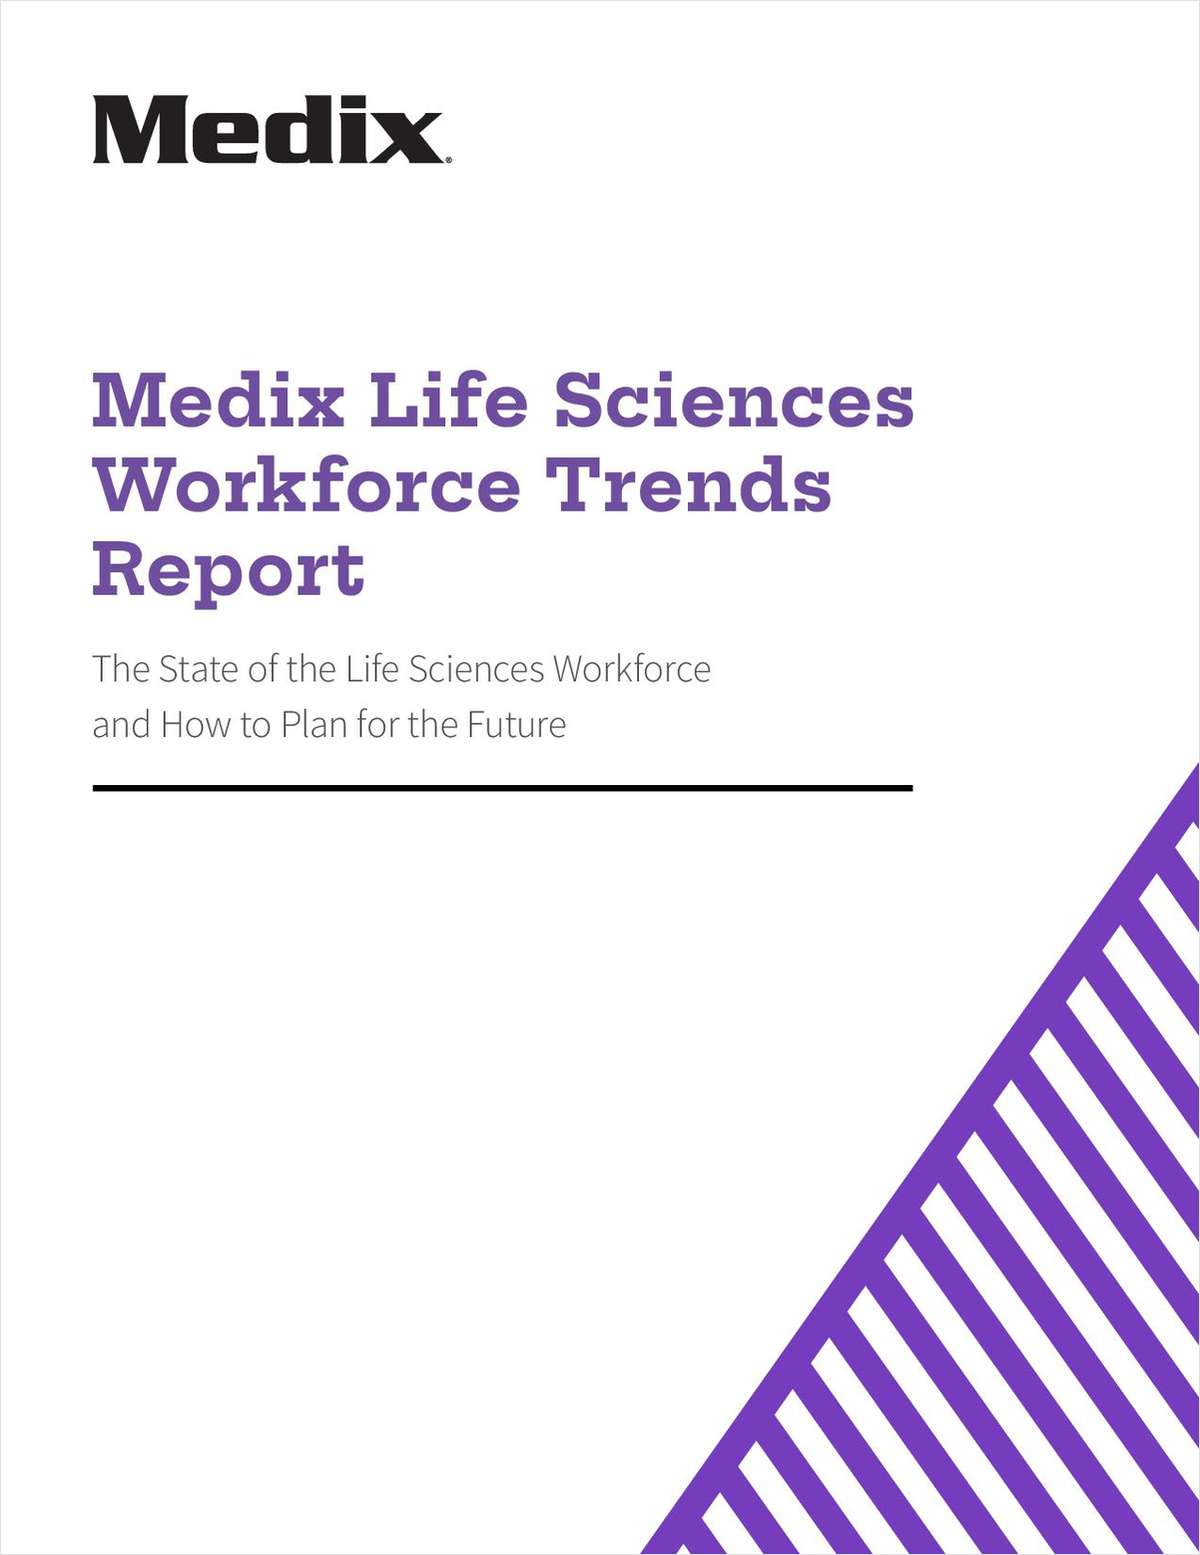 w aaaa17700c8 - Plan for 2023 Hiring With Medix Life Sciences Workforce Trends Report